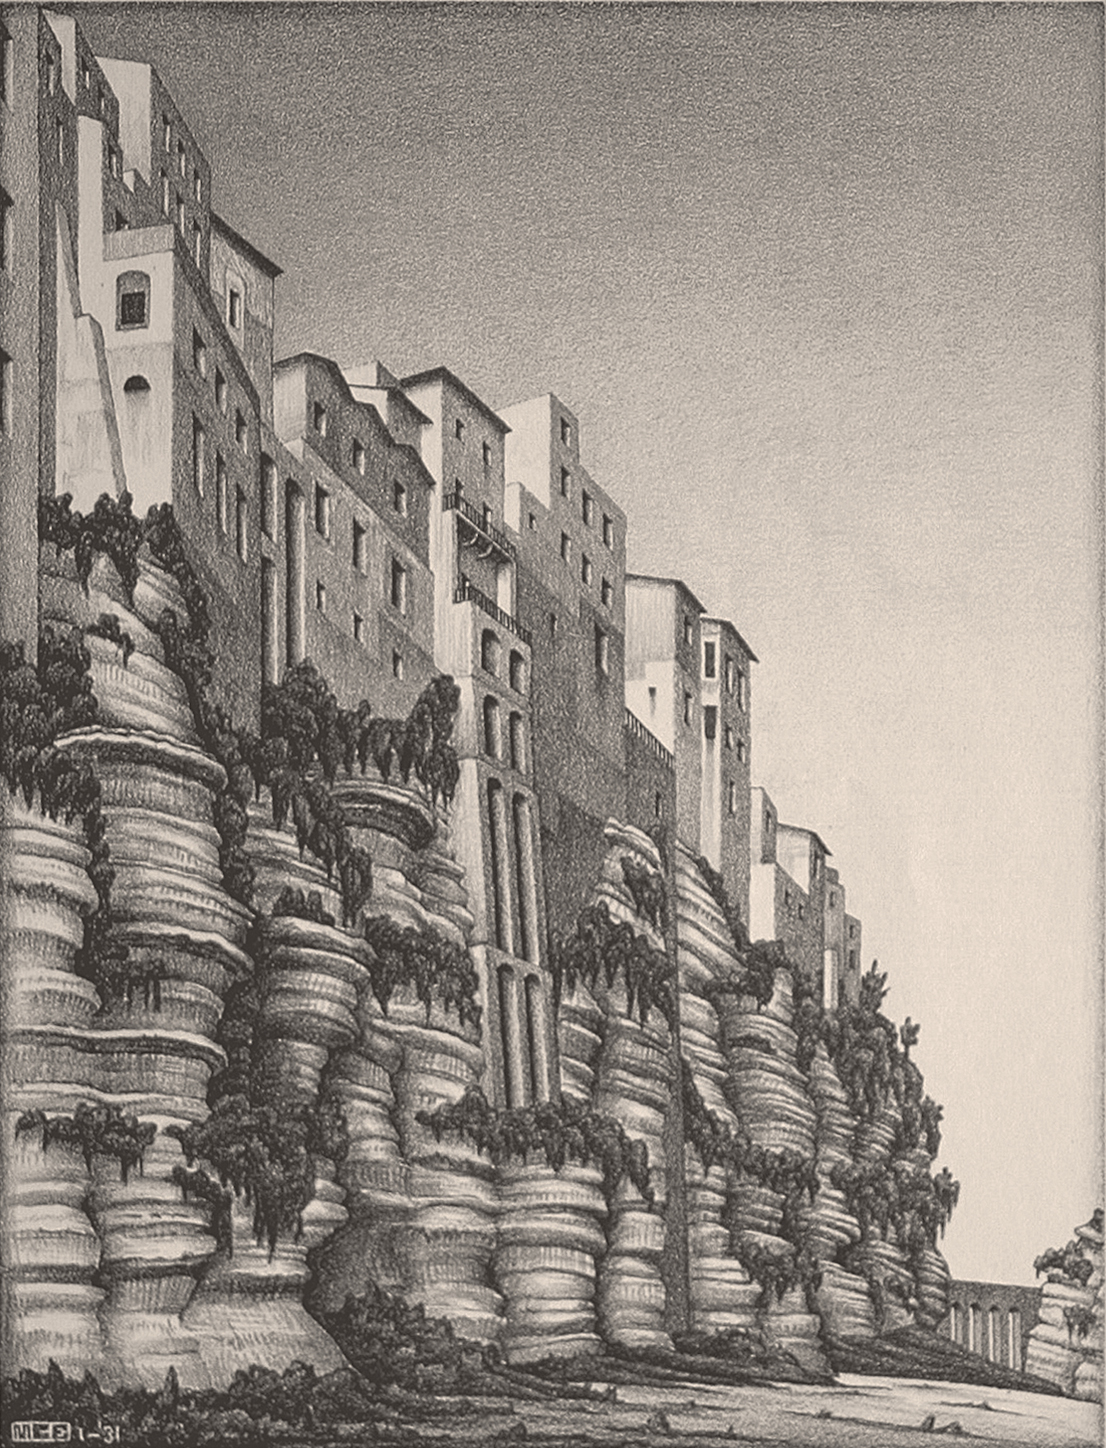 Maurits Cornelis Escher Tropea, Calabria 1931 litografia 313 x 235 mm Collezione Federico Giudiceandrea All M.C. Escher works © 2014 The M.C. Escher Company. All rights reserved www.mcescher.com